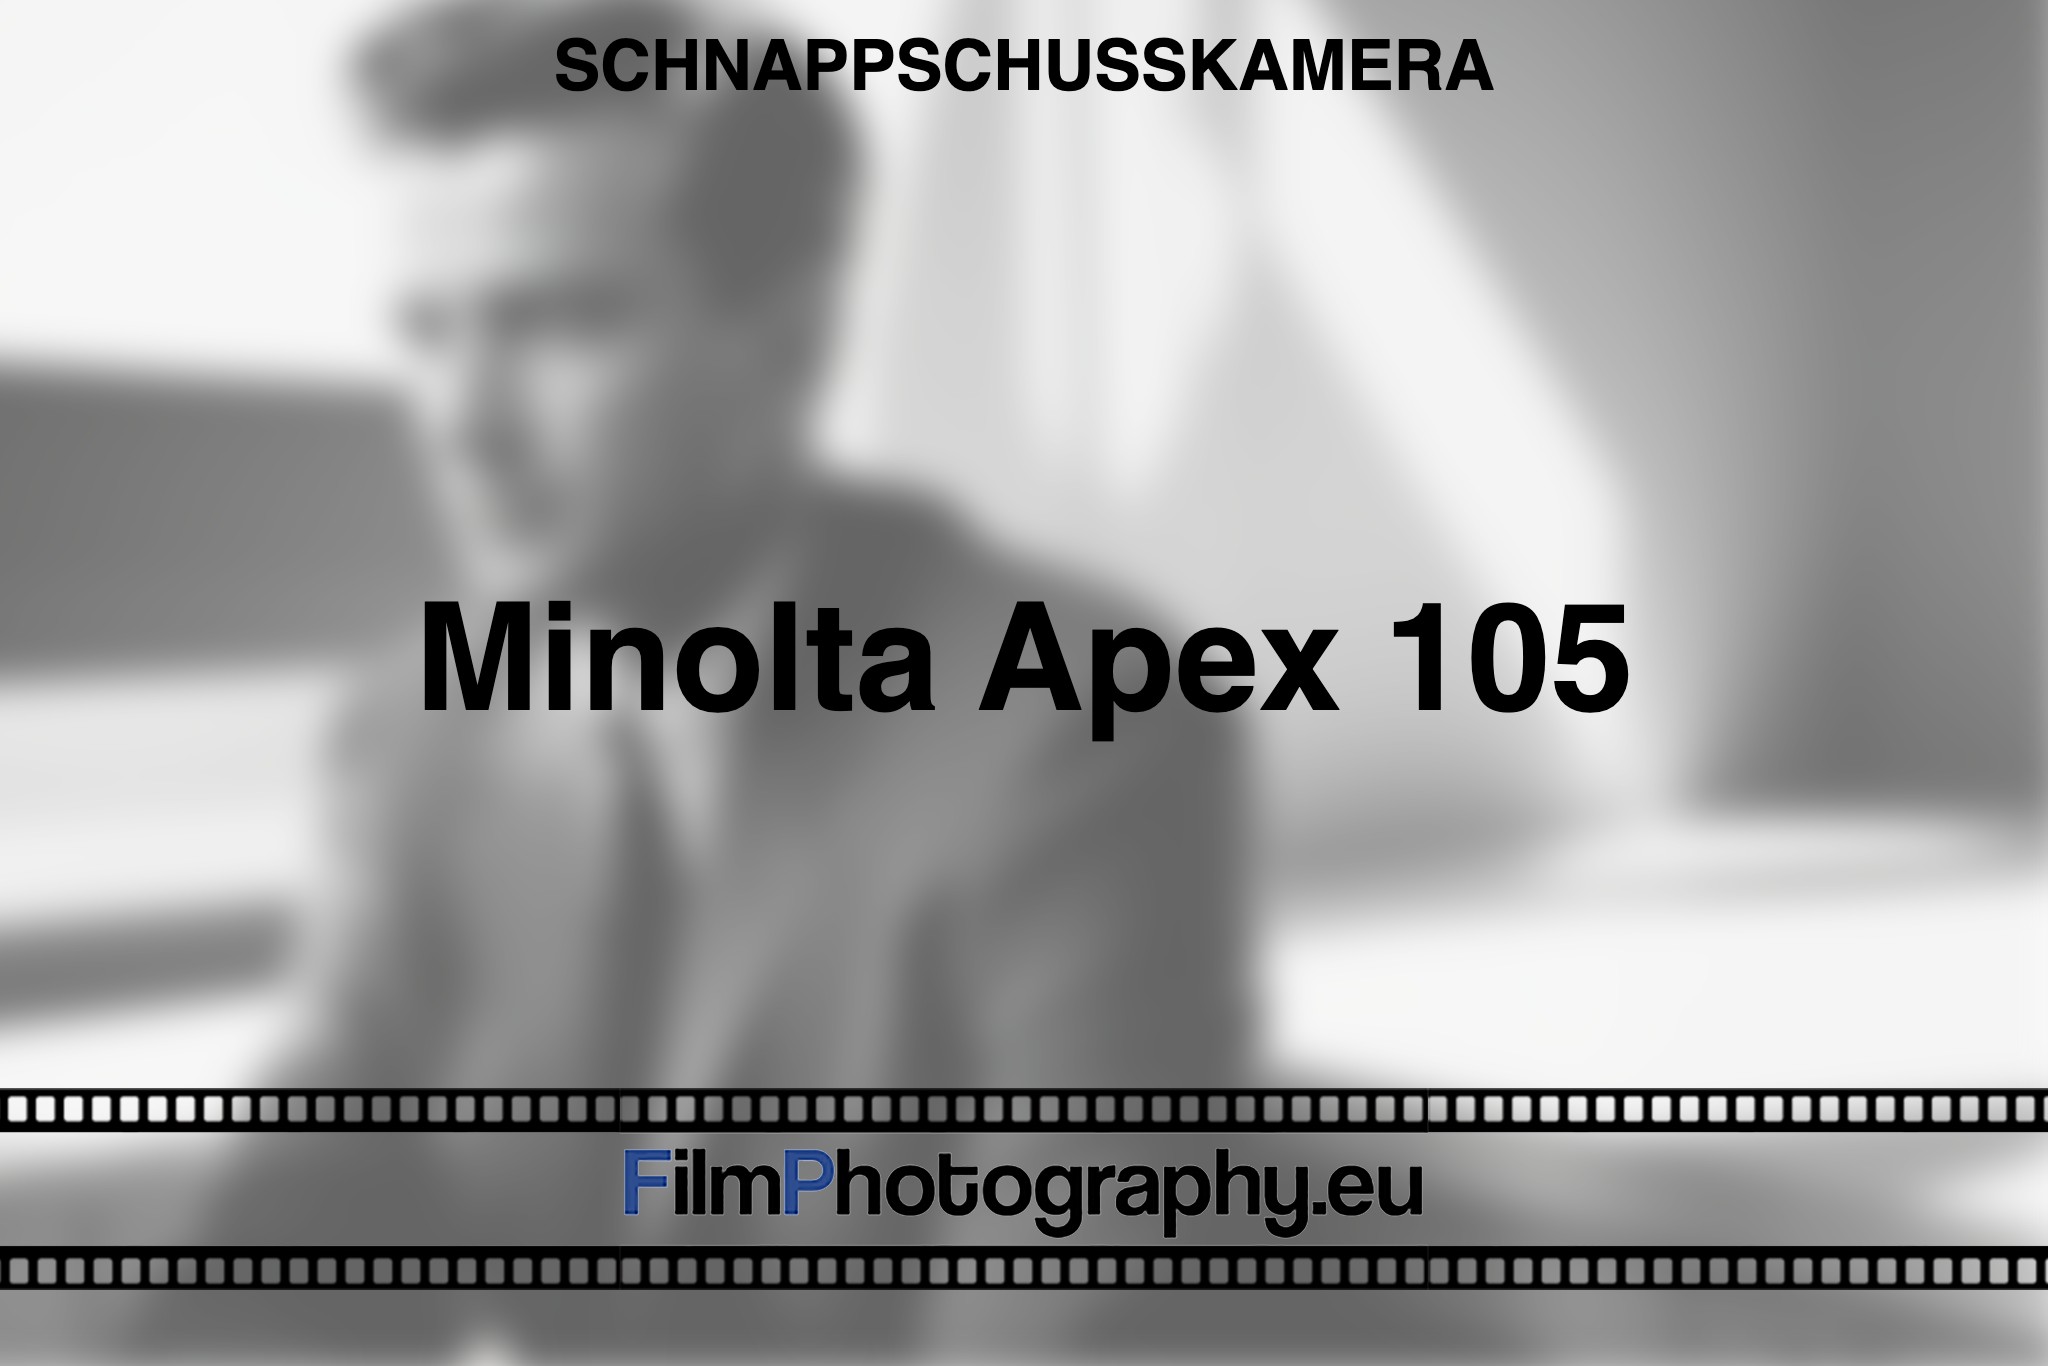 minolta-apex-105-schnappschusskamera-bnv